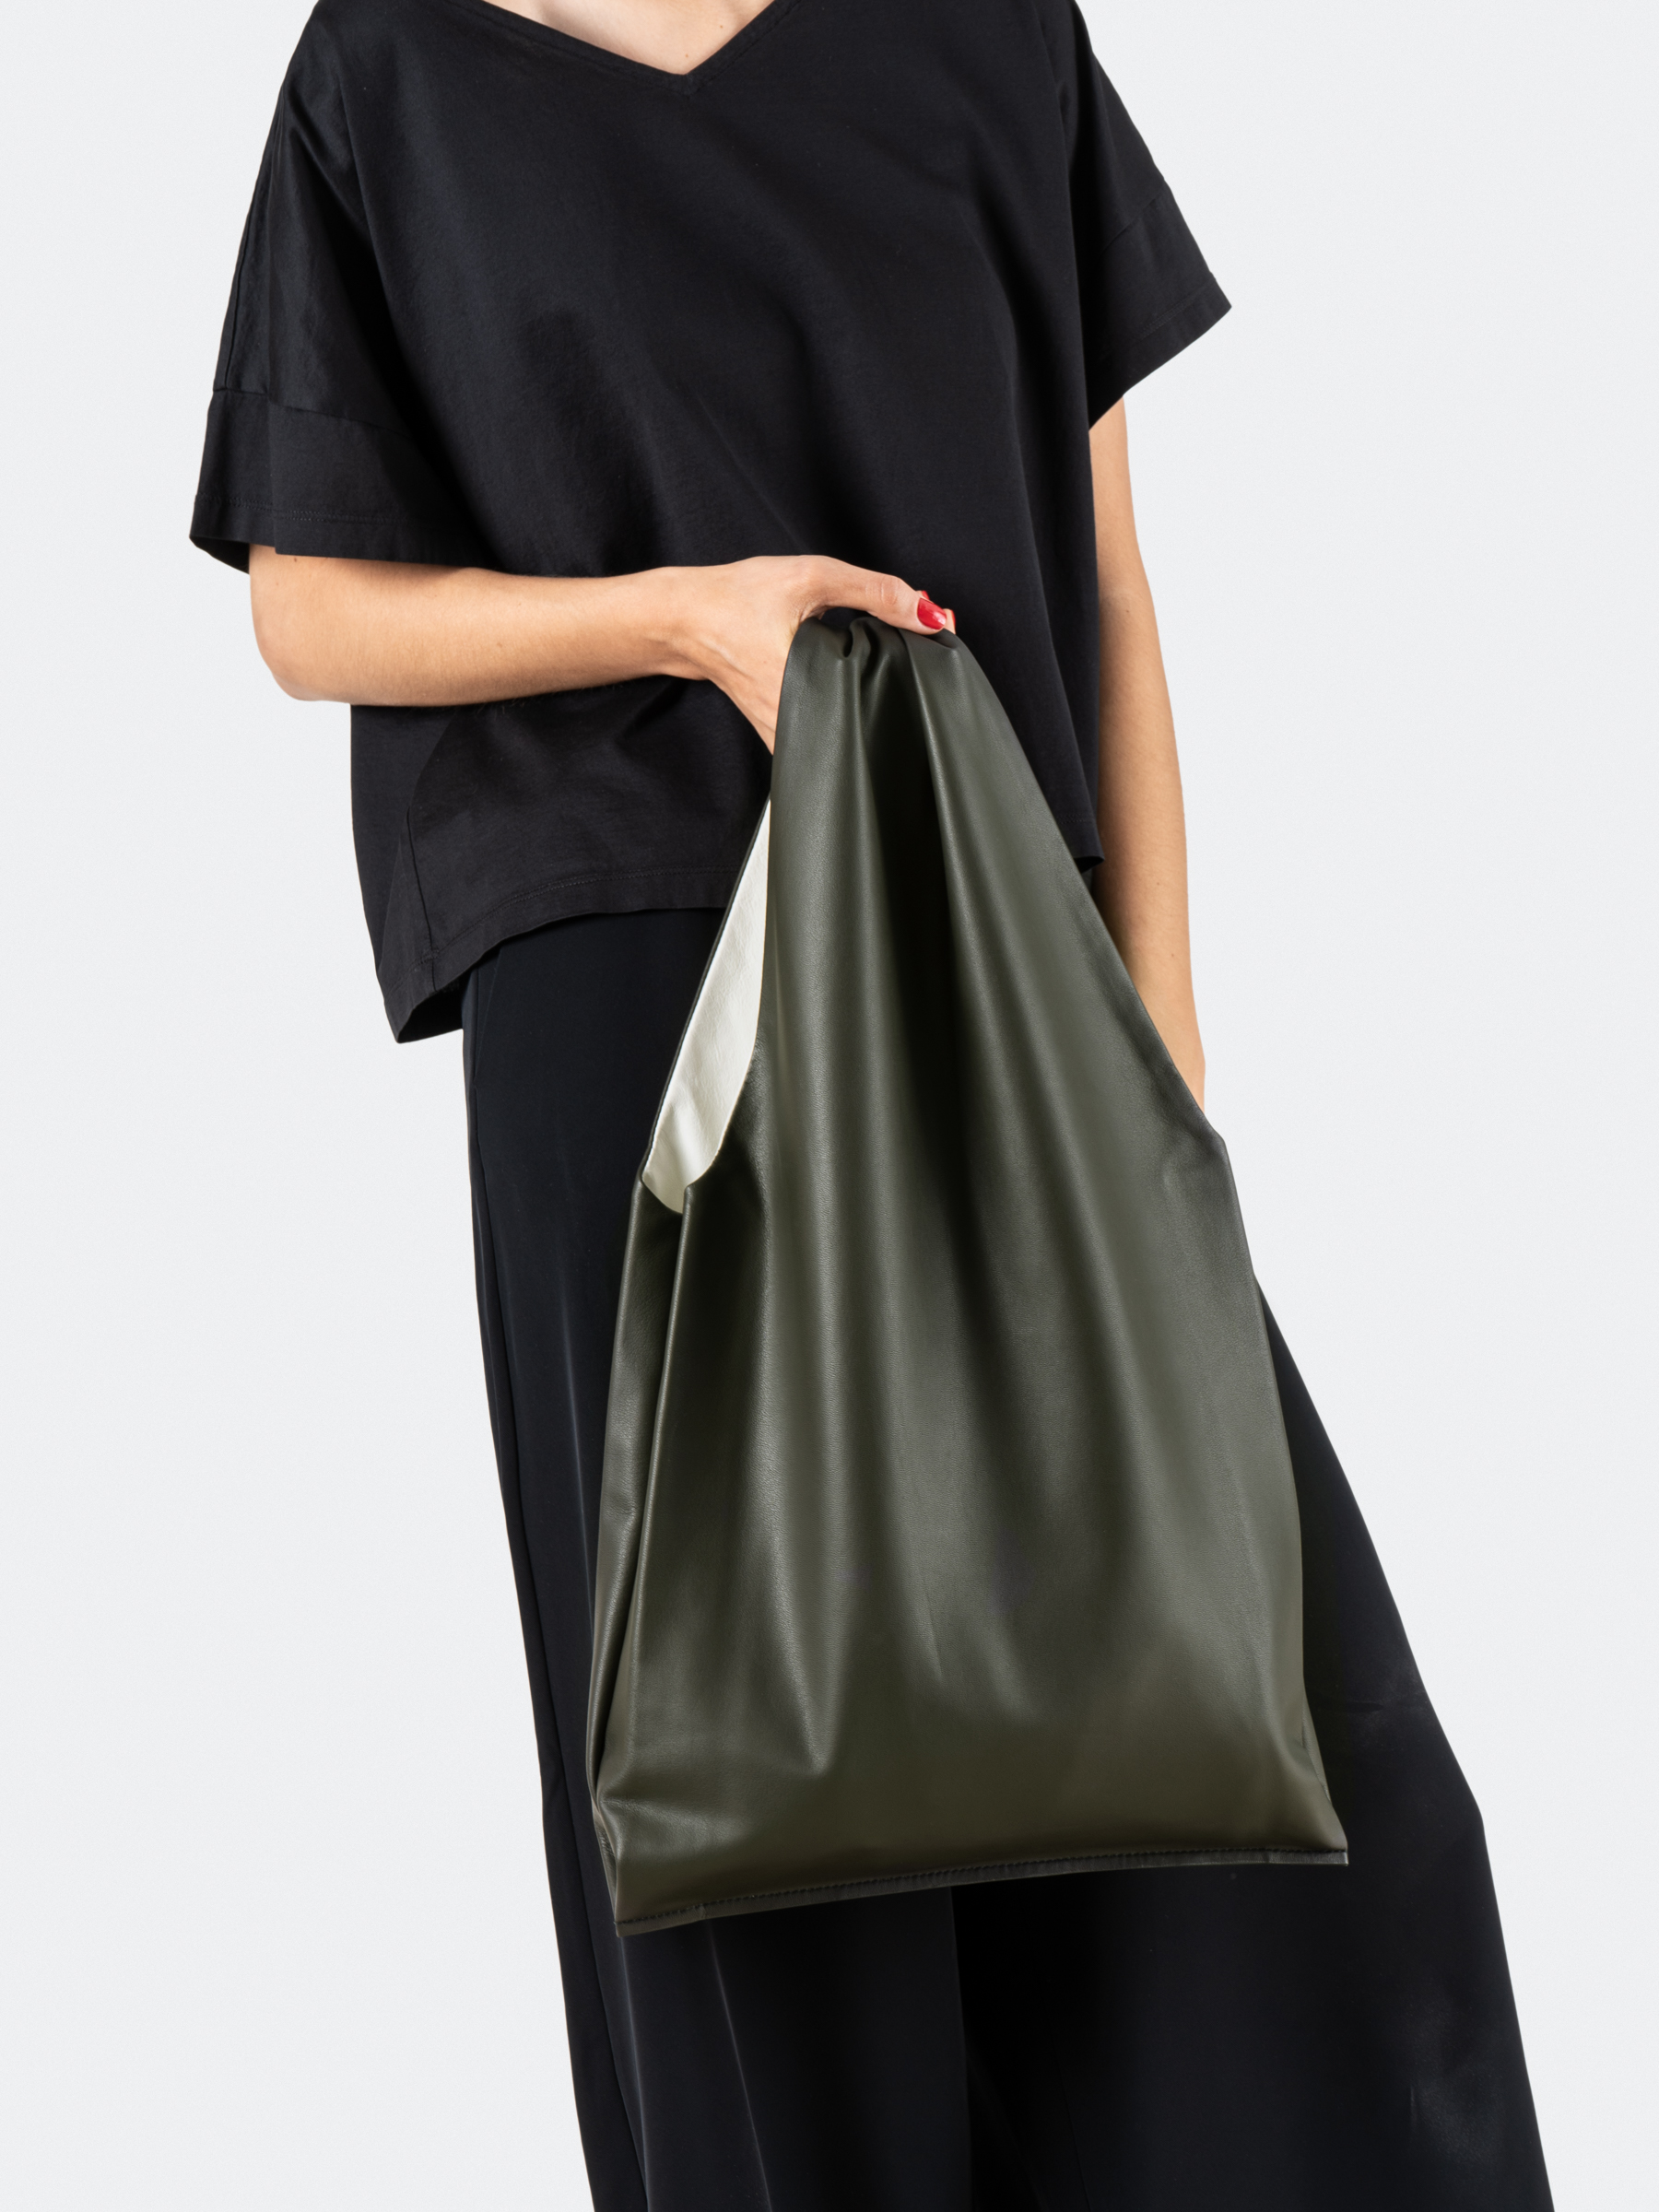 Prada nappa stripes leather bag | eBay